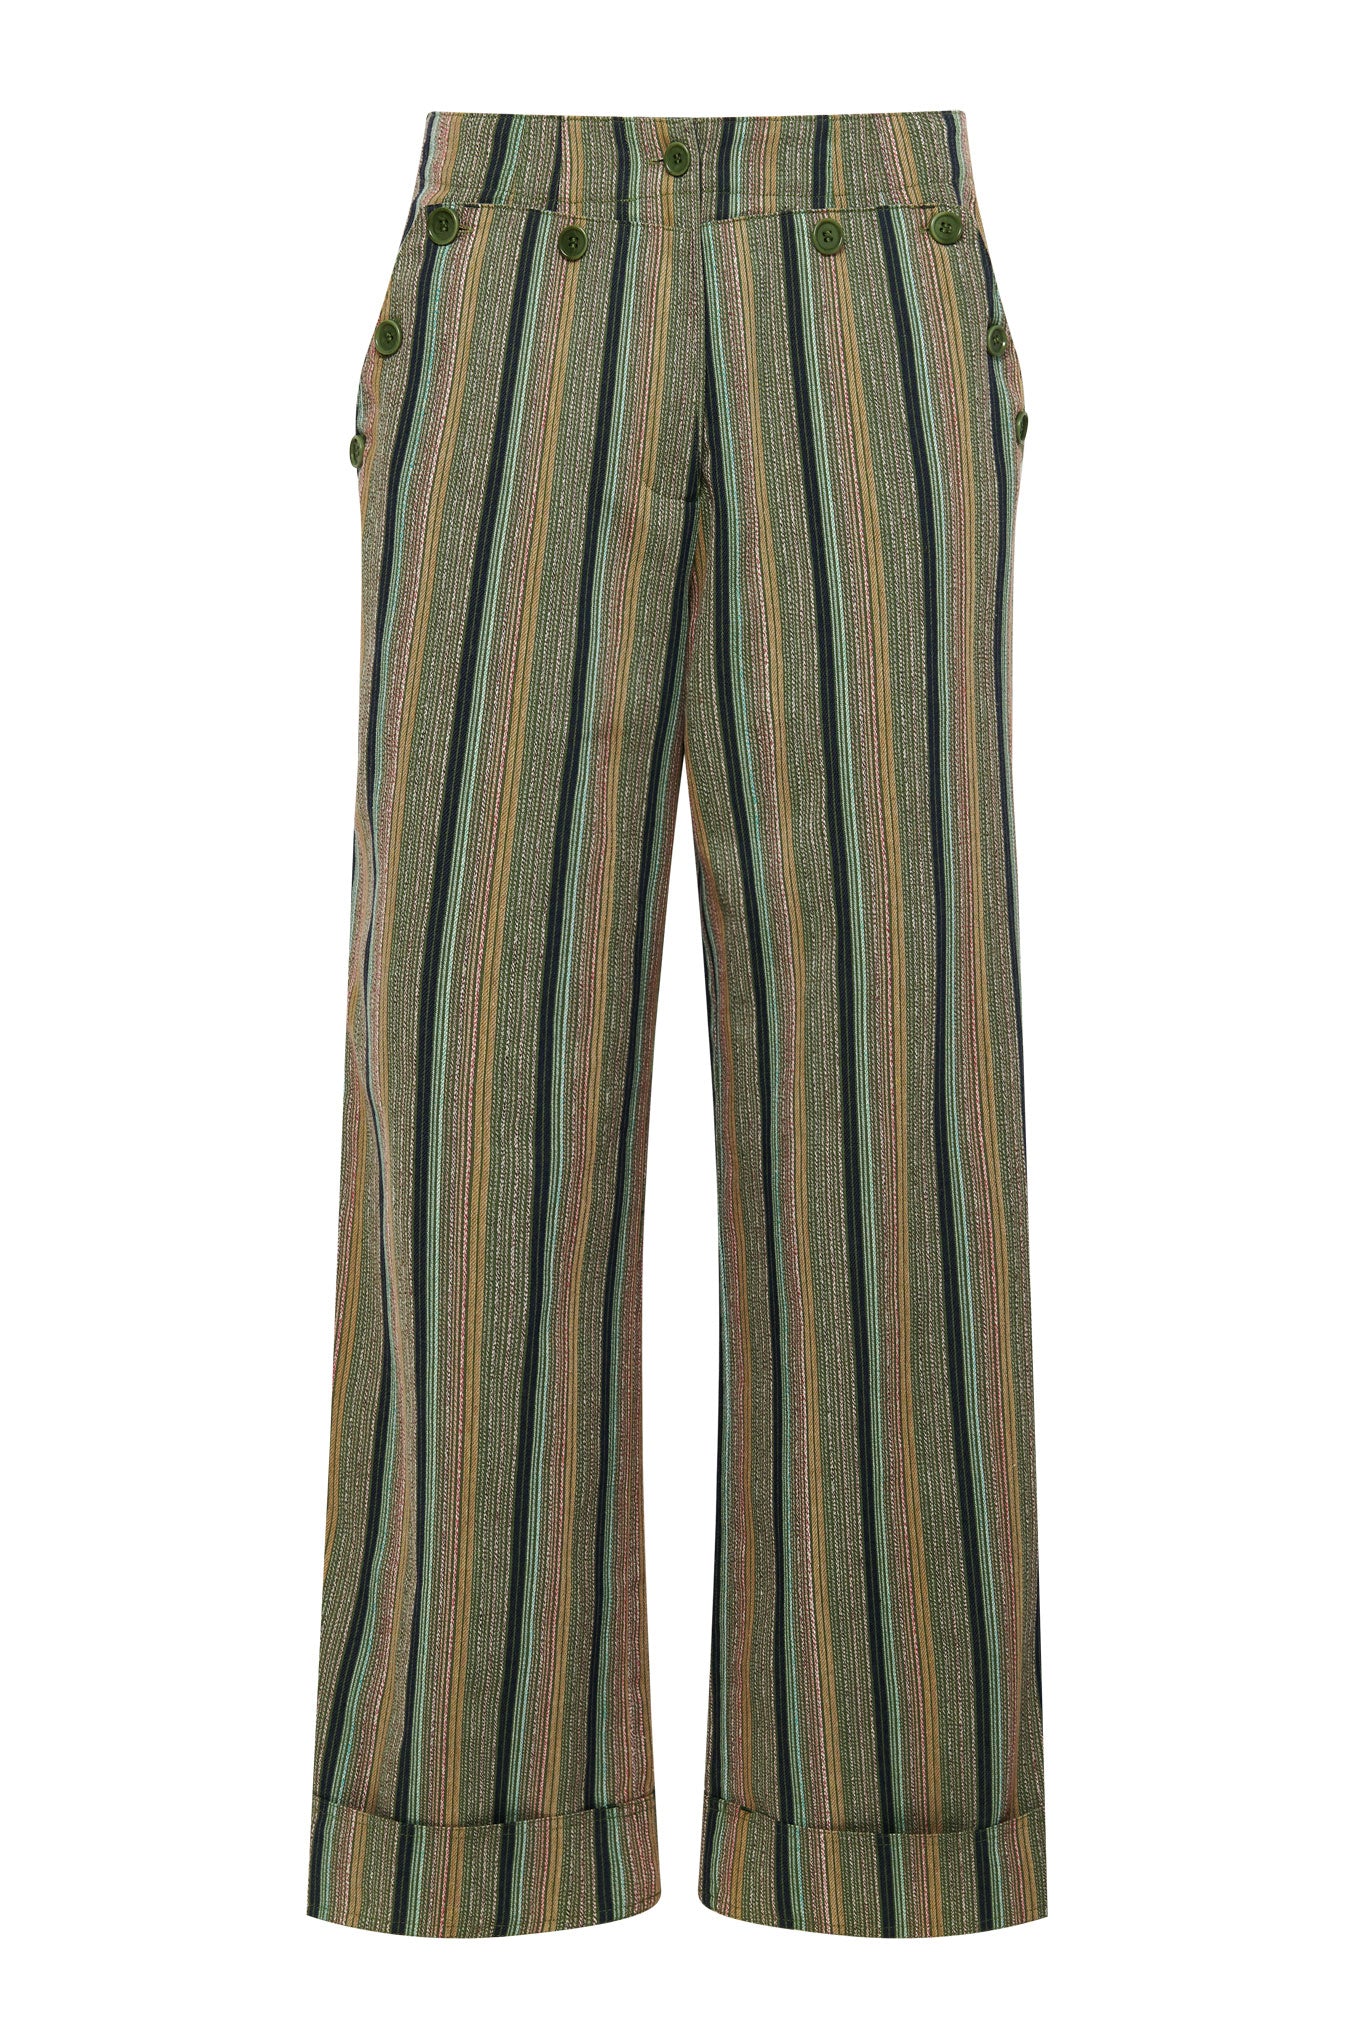 TANSY - Organic Cotton Trousers Green Stripe